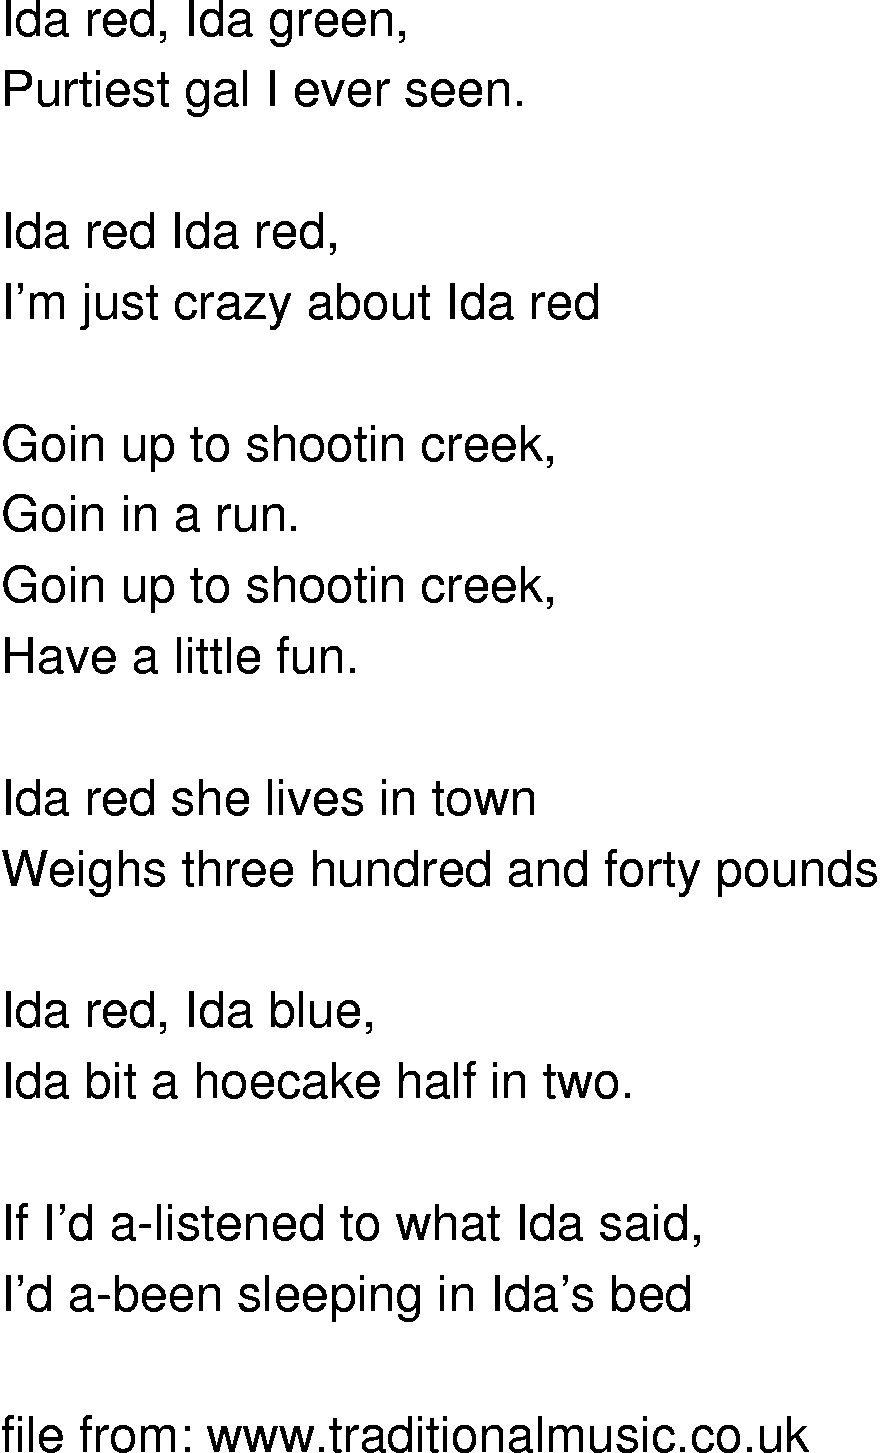 Old-Time (oldtimey) Song Lyrics - ida red